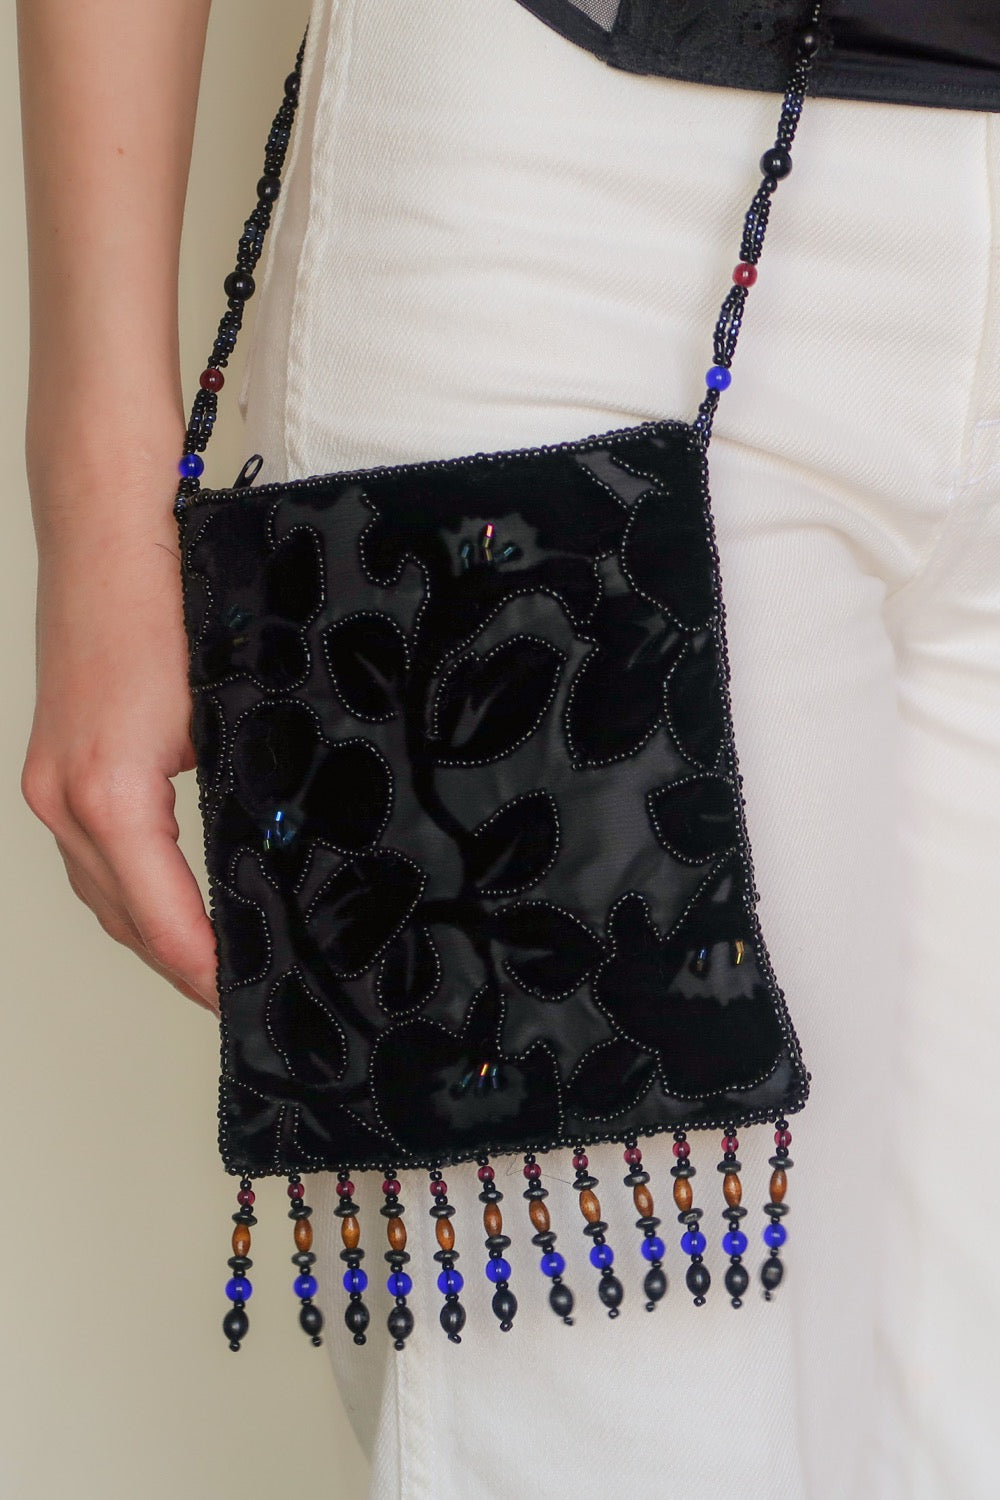 Black Velvet Beaded Purse Handbag 1980s Beaded Bag Art Nouveau